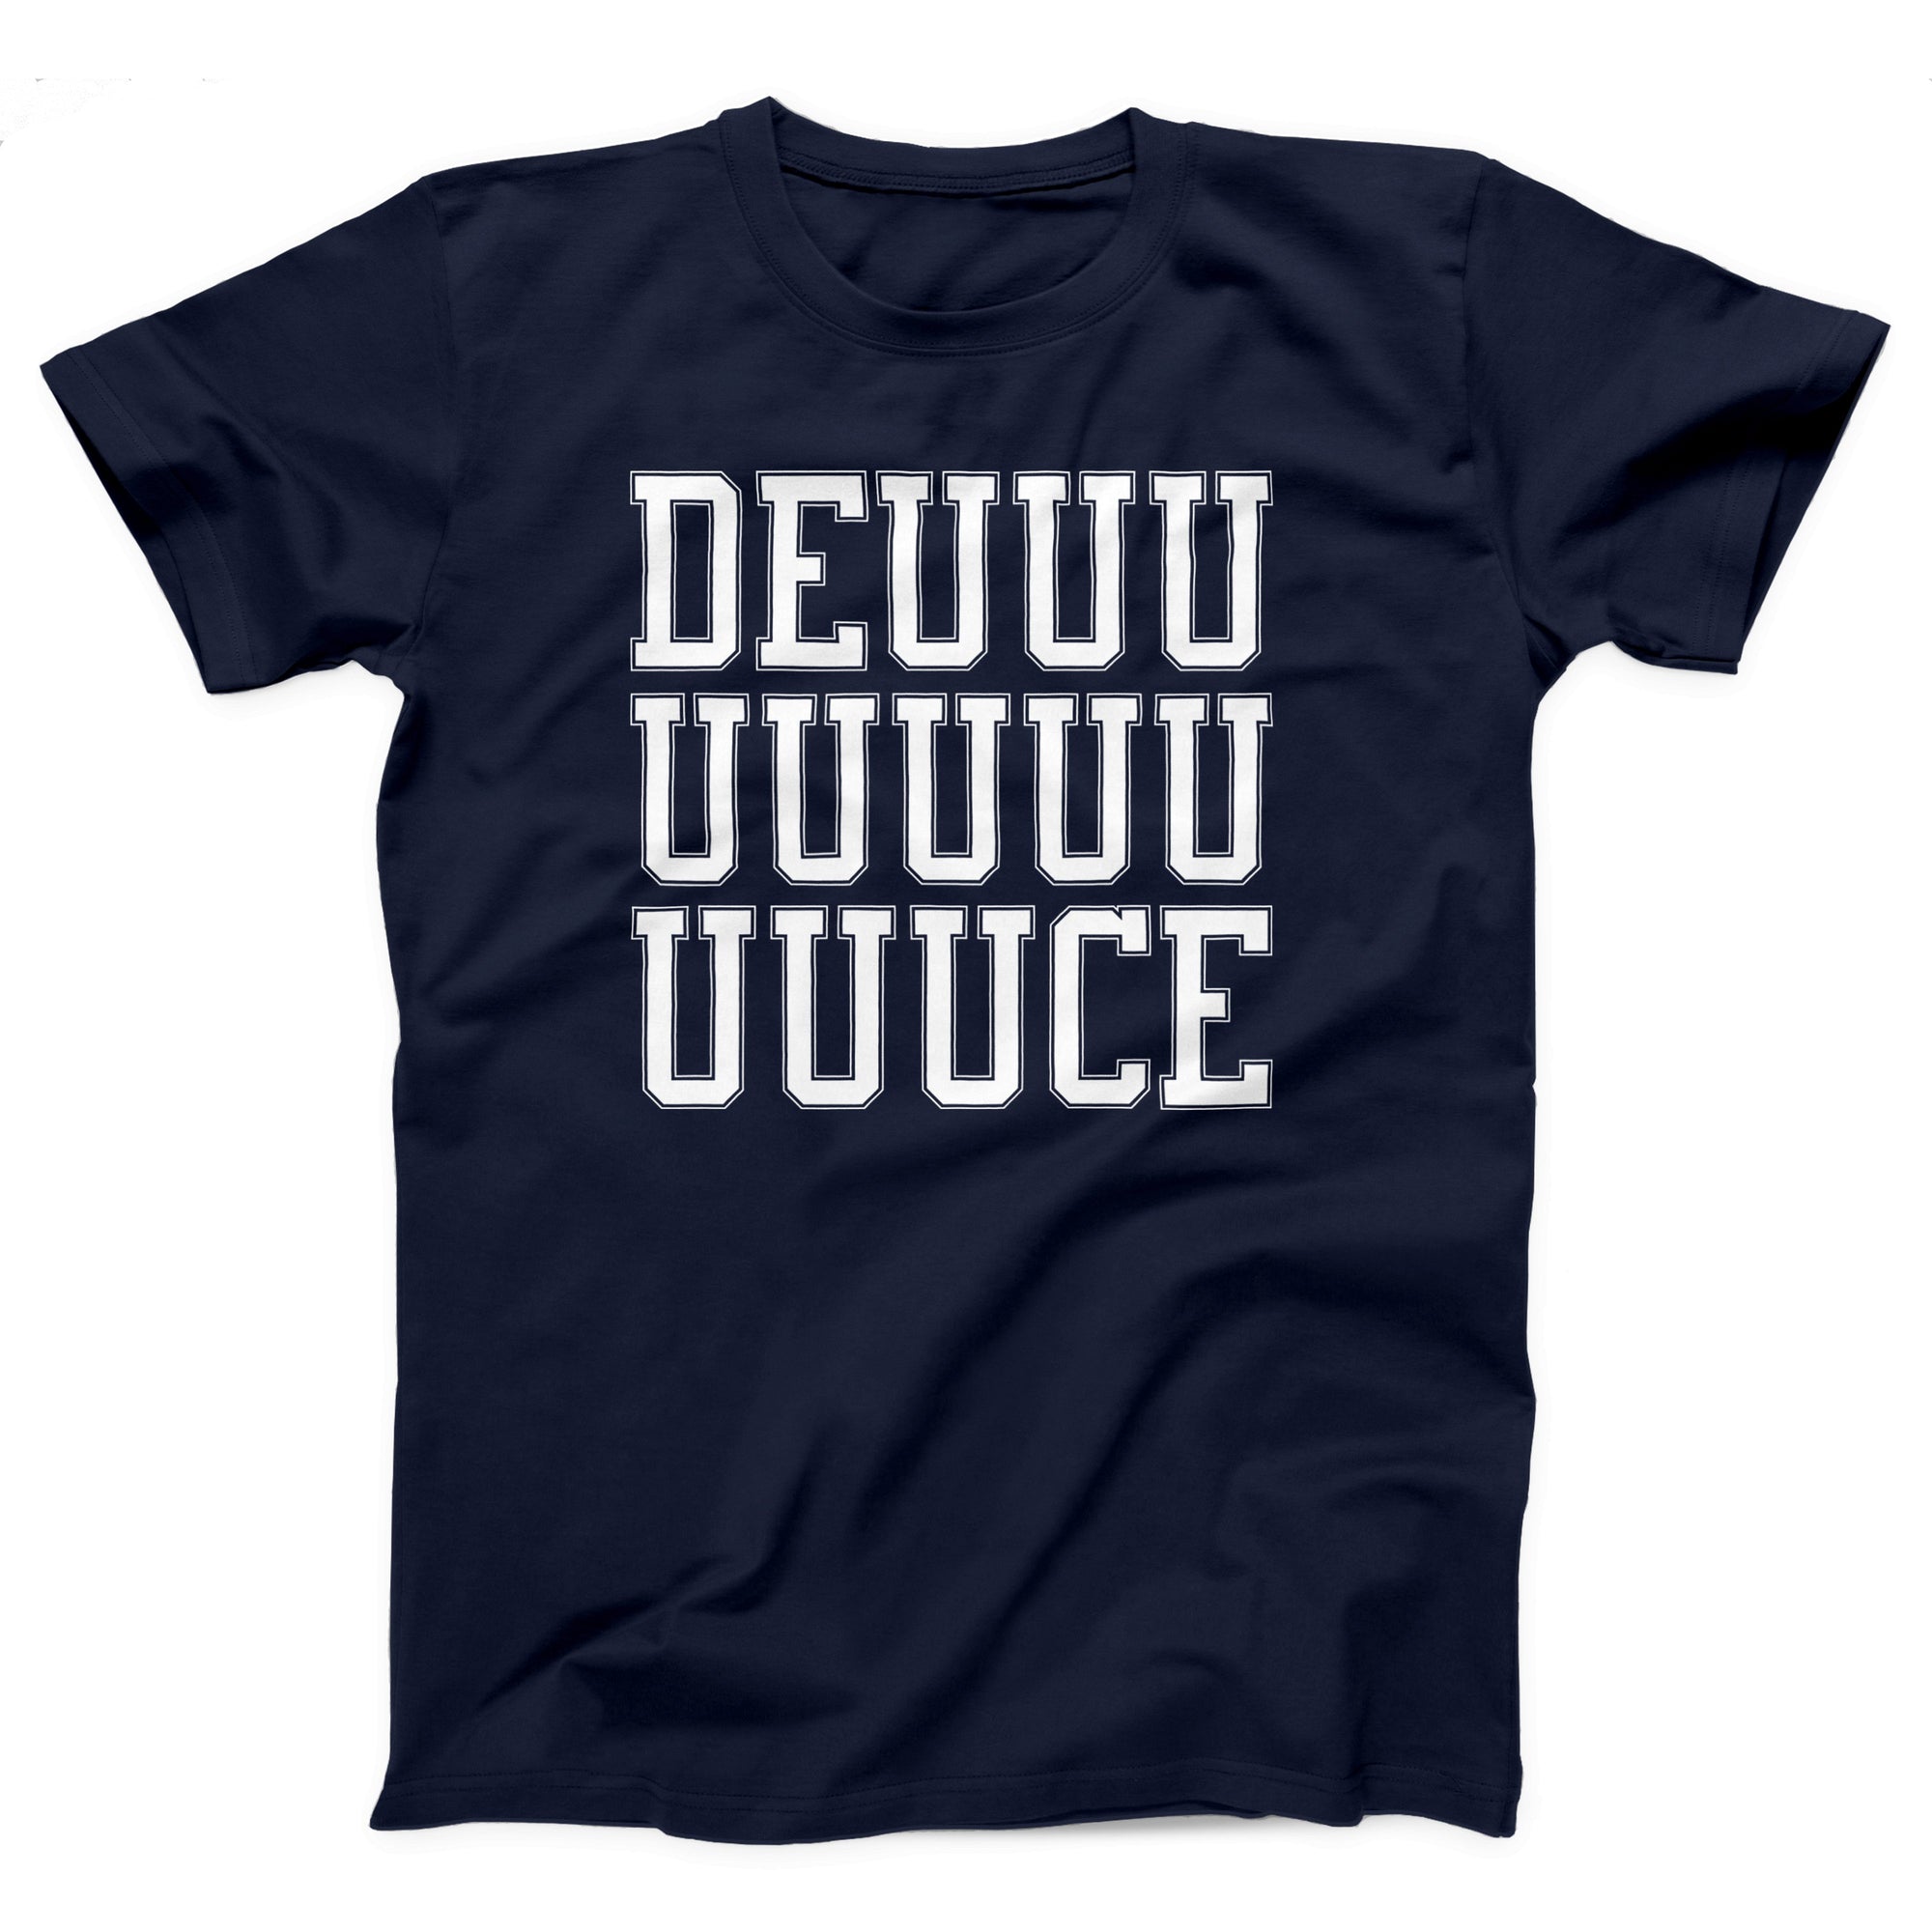 Deuuuce Adult Unisex T-Shirt - Twisted Gorilla